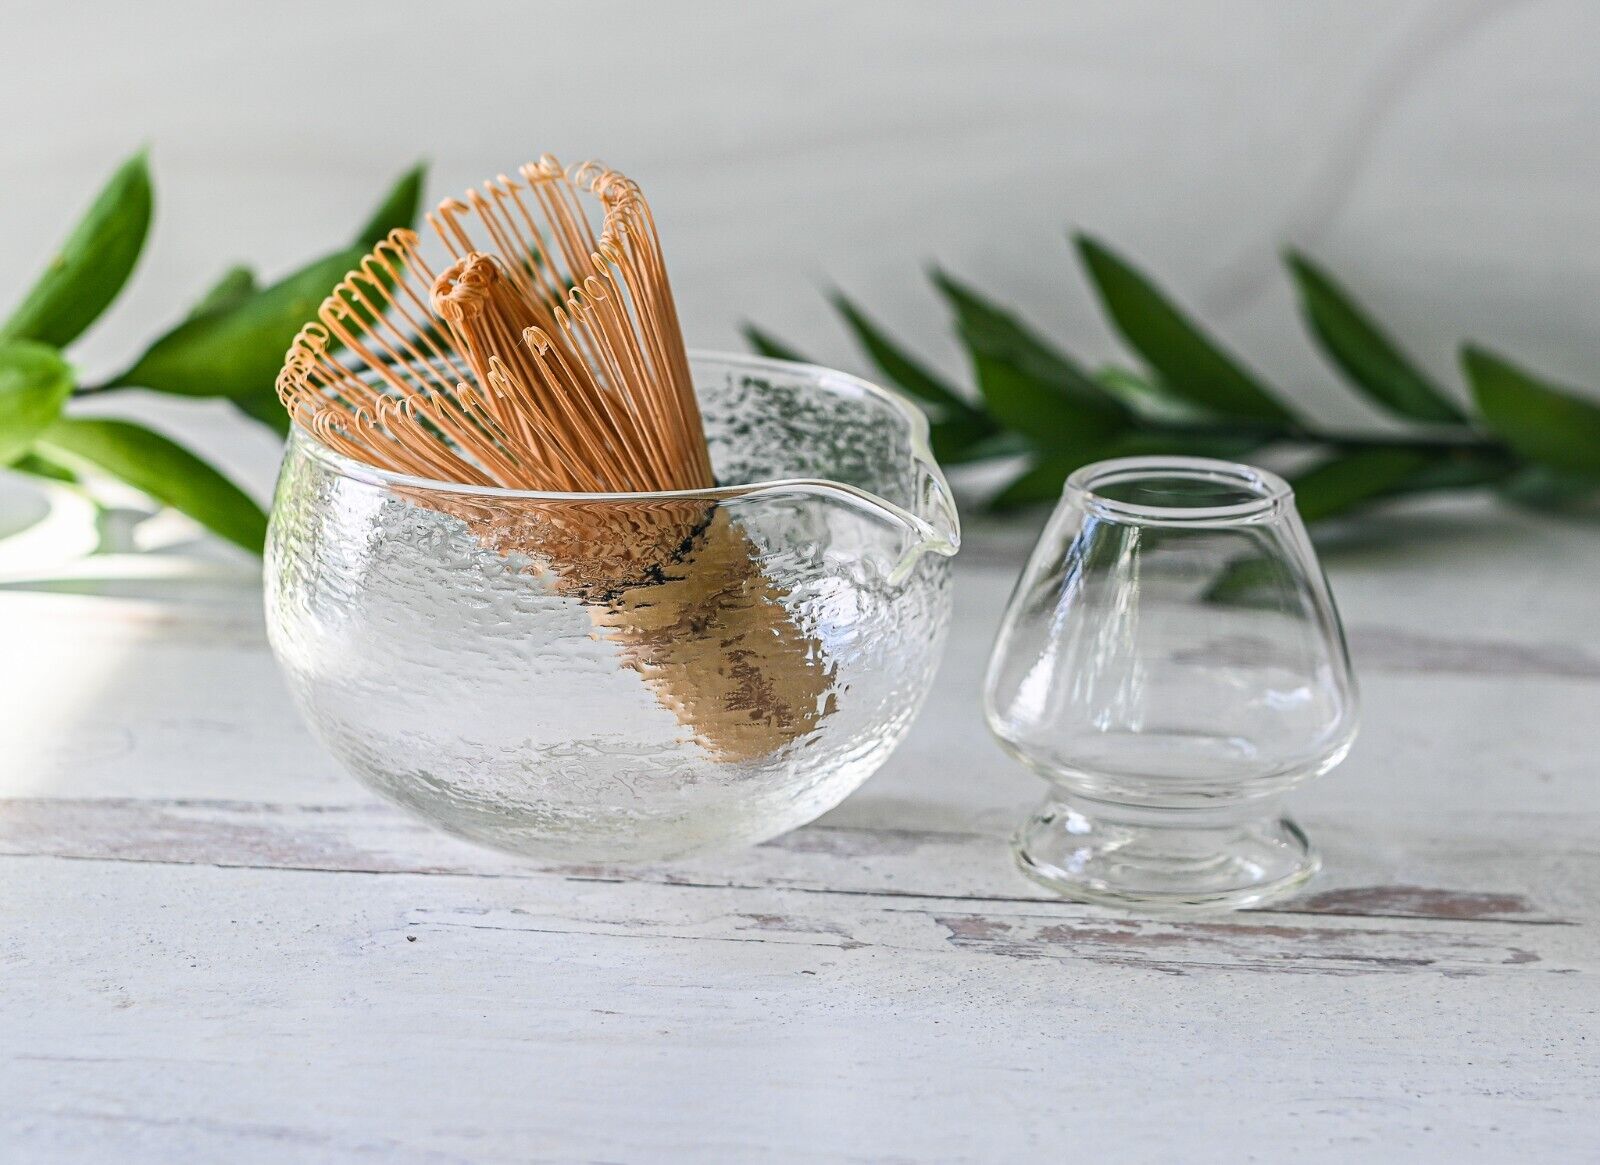 Halloween Gift - Textured Glass Matcha Tea Set, Bowl, Whisk, Holder, USA seller